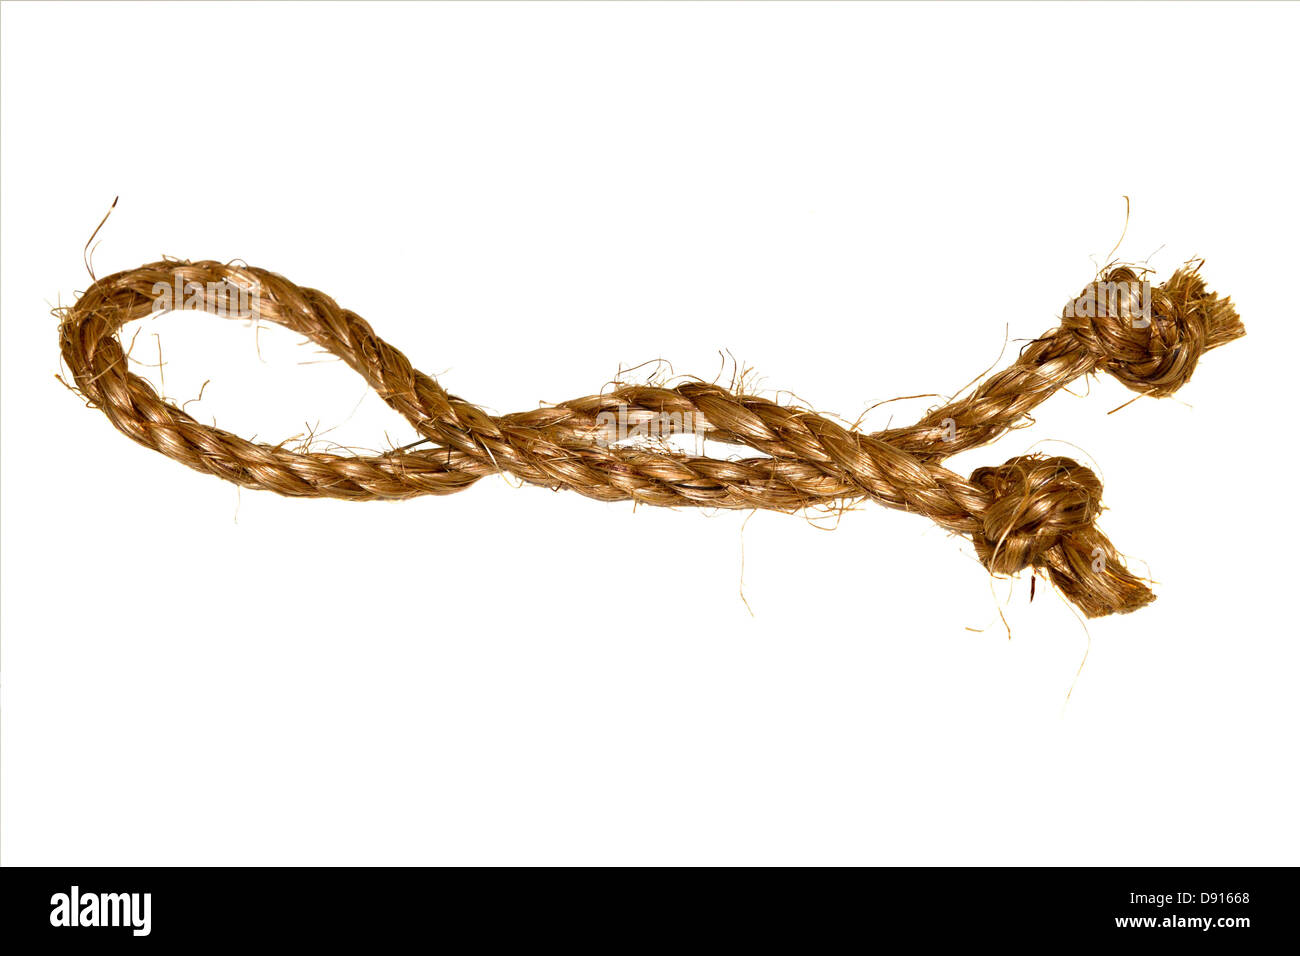 hemp rope on a white background Stock Photo